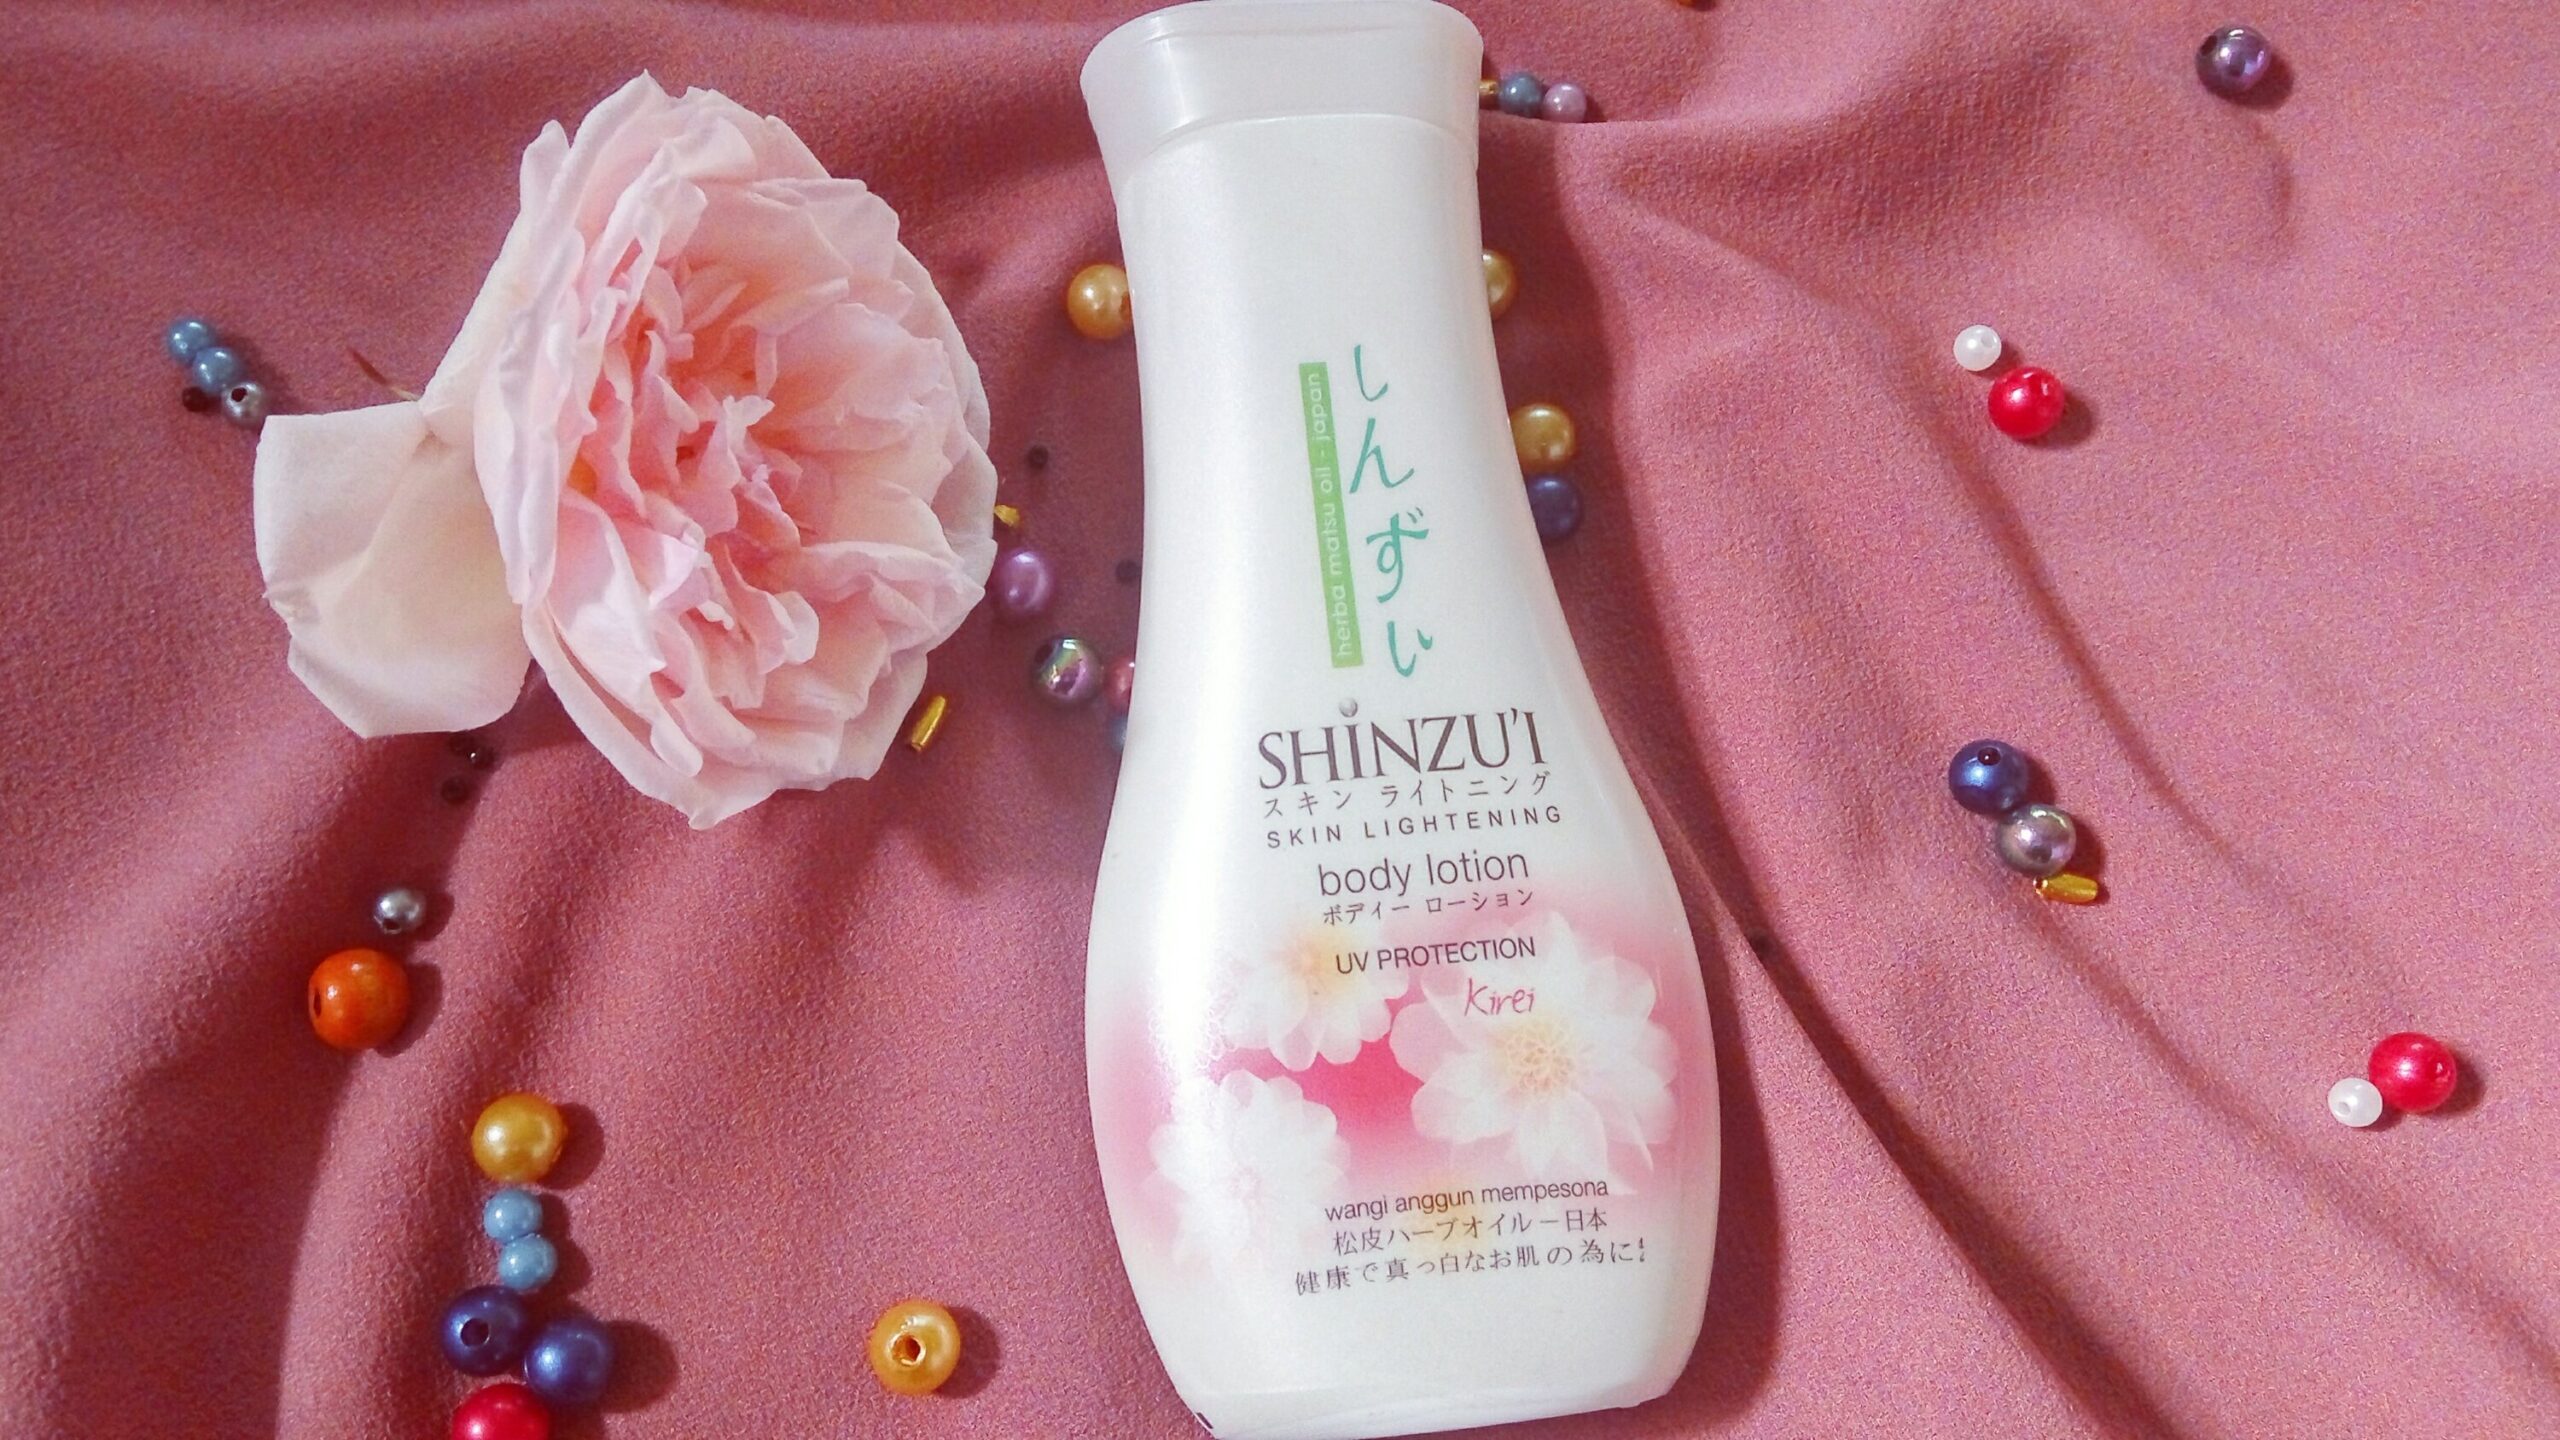 Shinzui-varian-skin-lightening